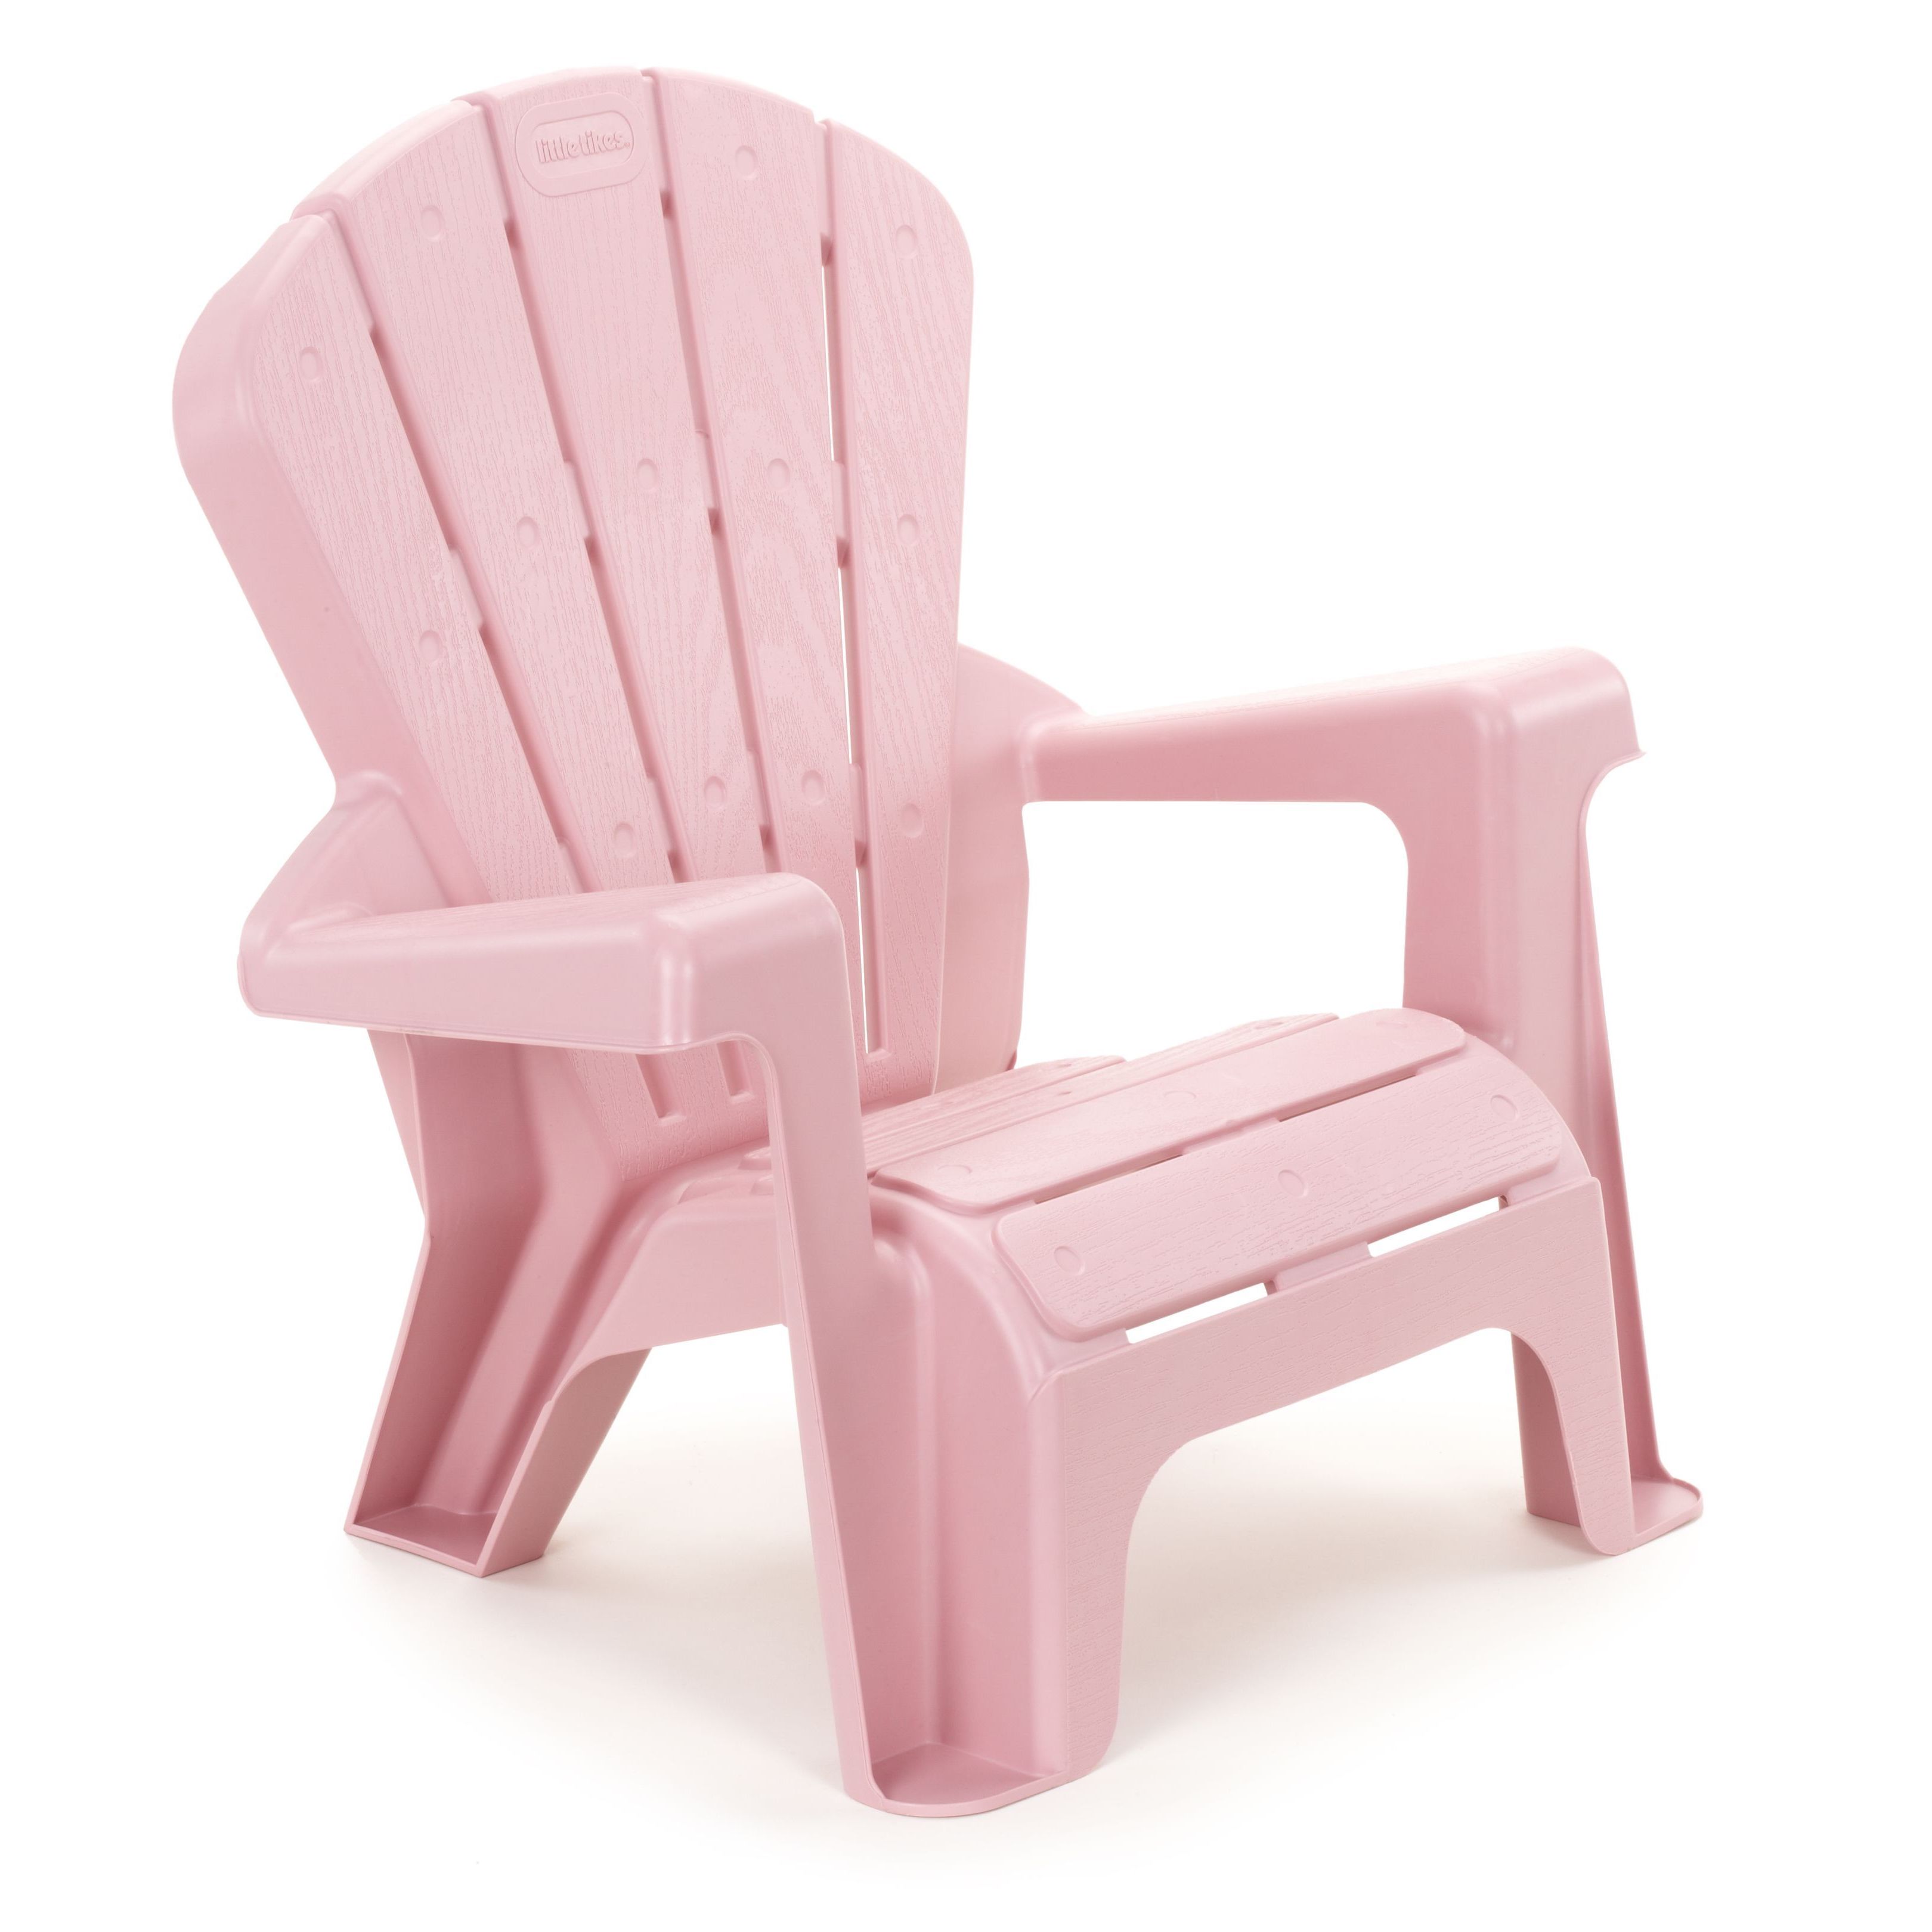 little tikes plastic chair